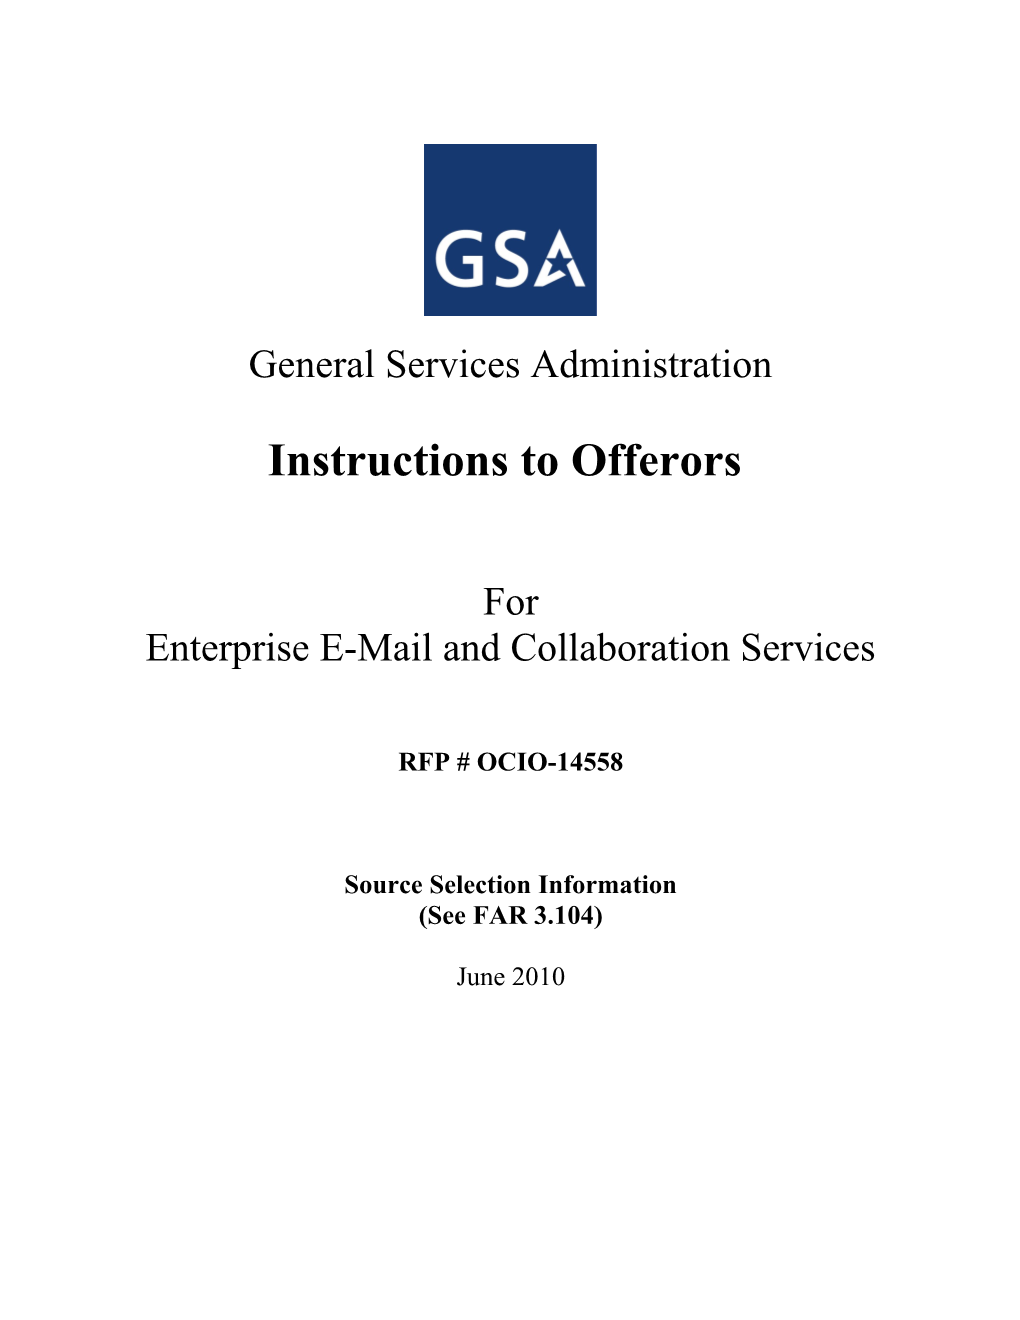 GSA Email + Collaboration Cloud Services